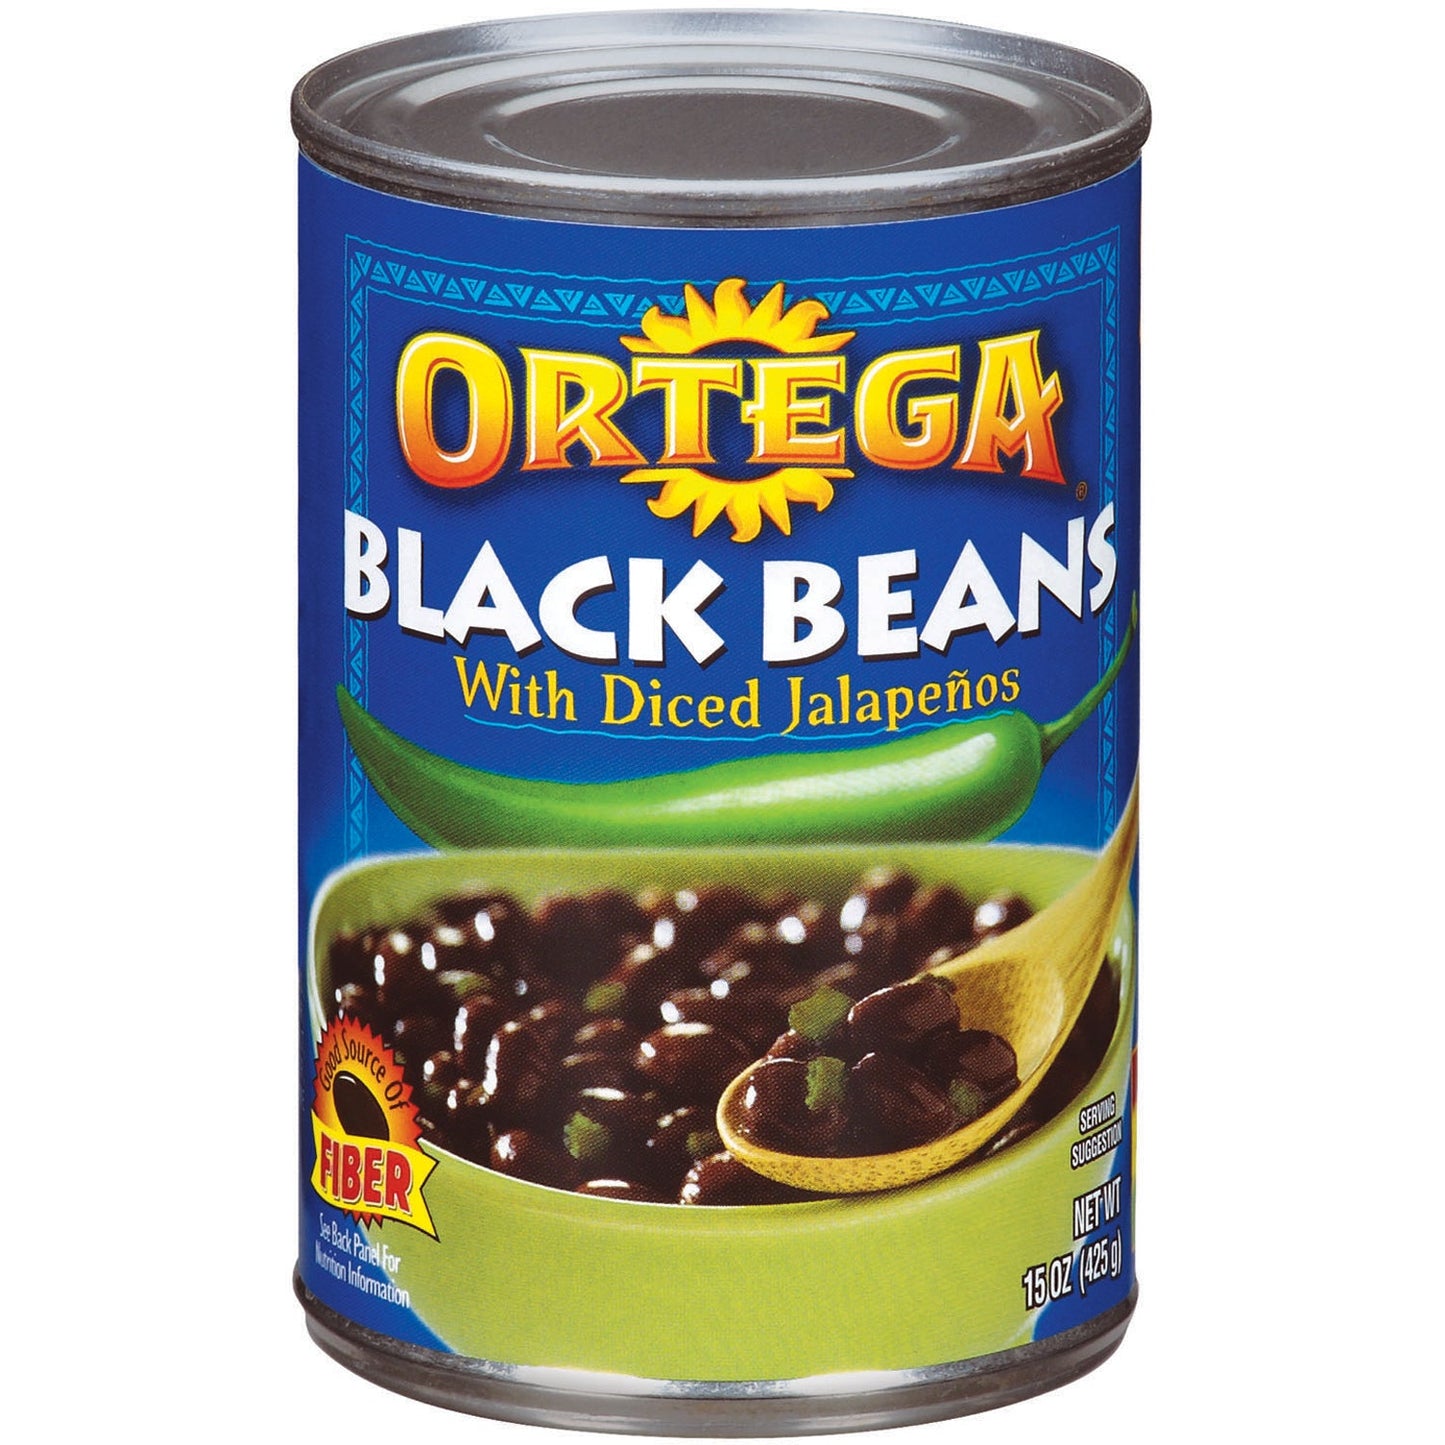 Ortega Black Beans - Diced Jalapenos 15oz